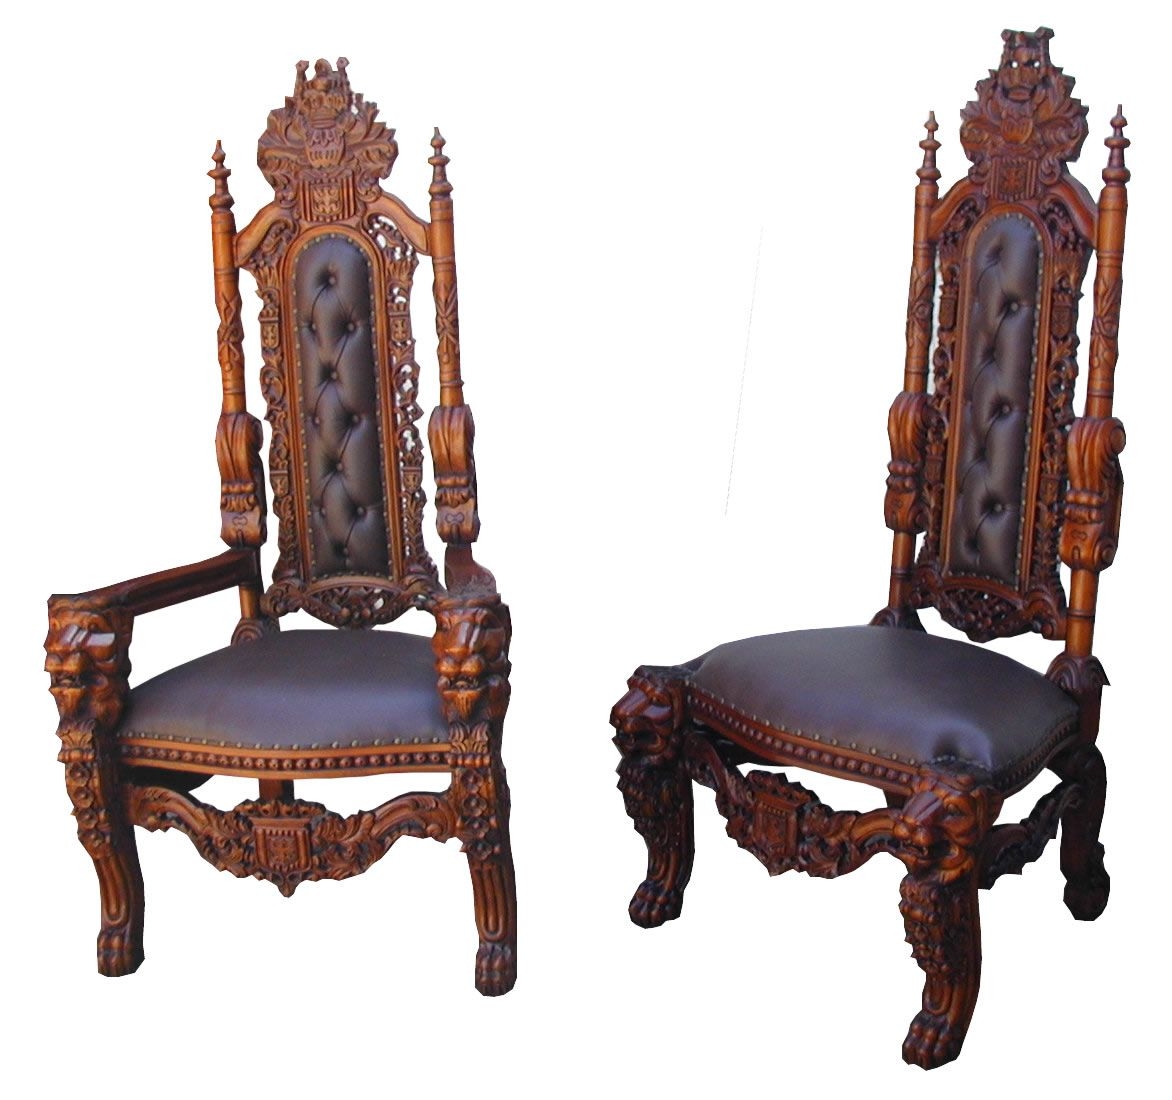 Gothic chair